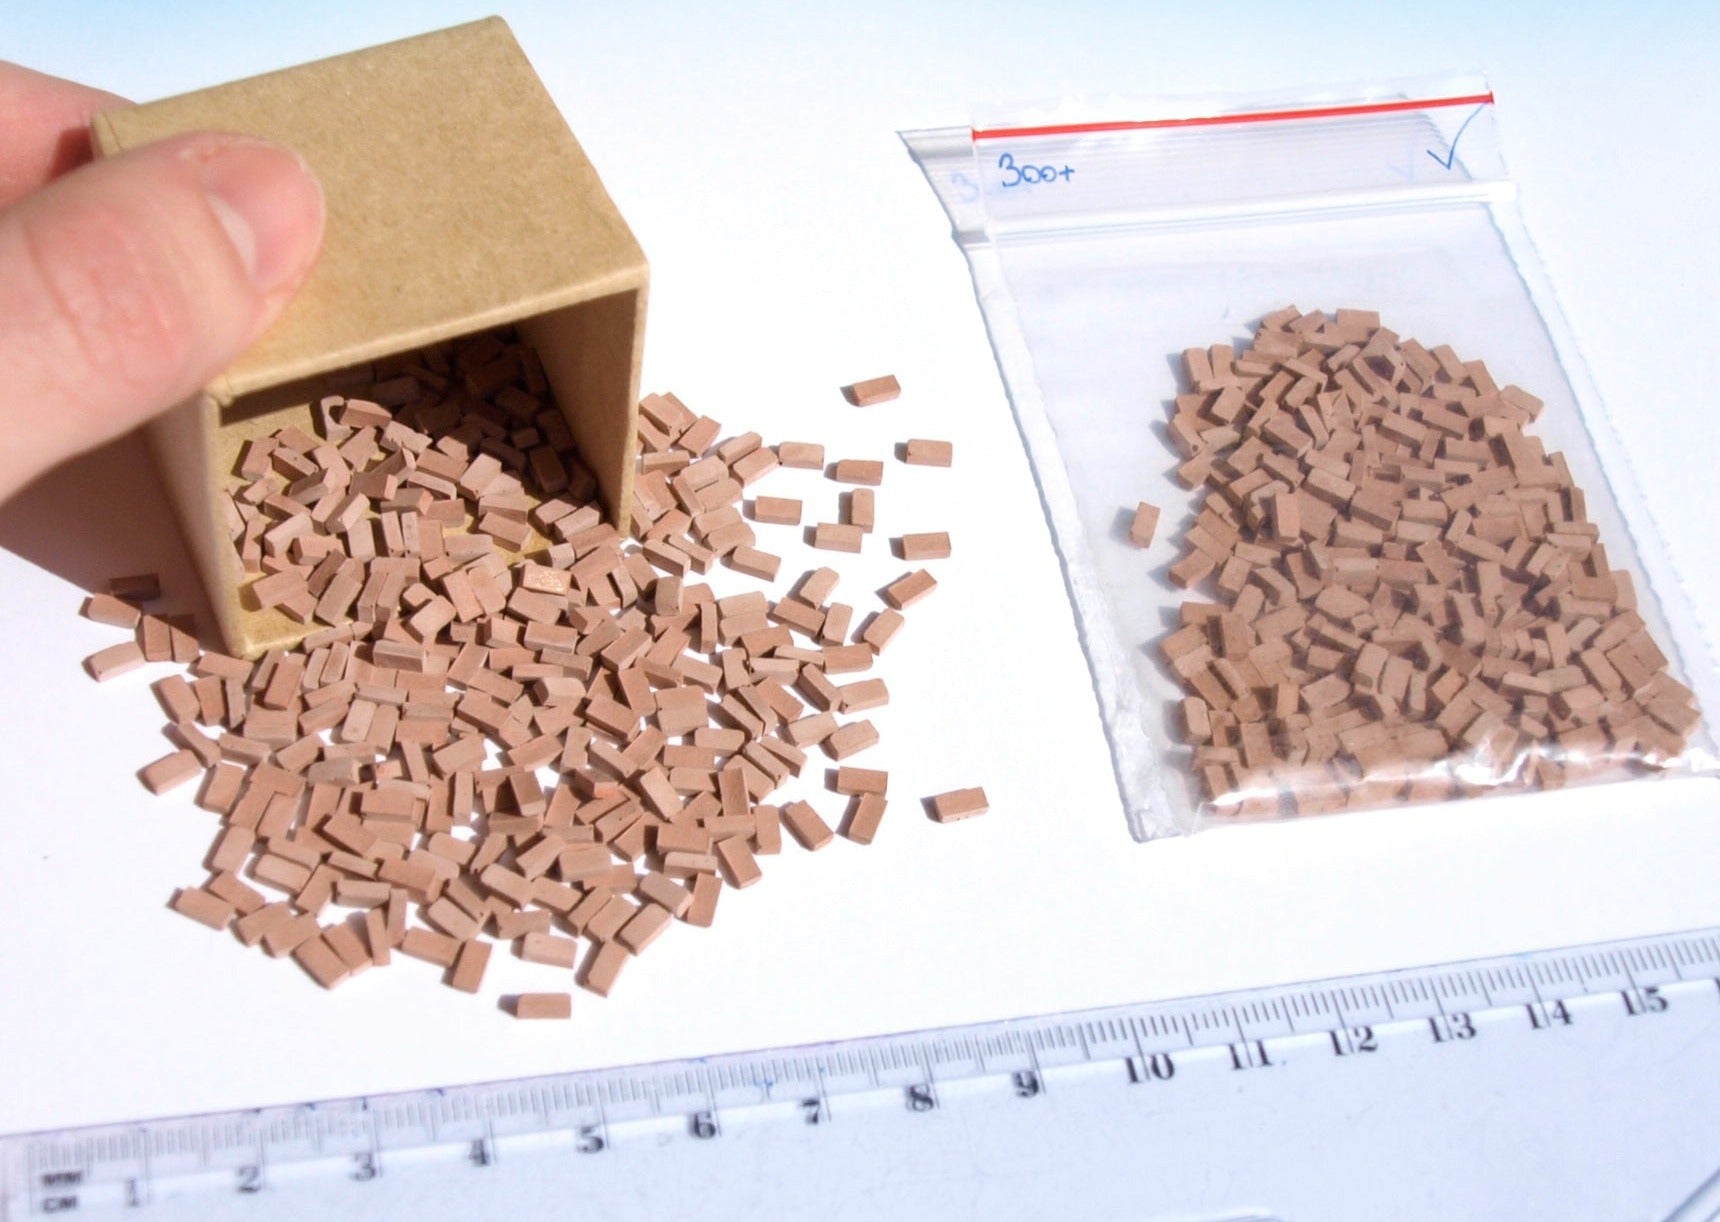 naaron88 Brown Miniature Bricks O scale 1:48 for dollhouse modeling –  Naaron88 Miniatures